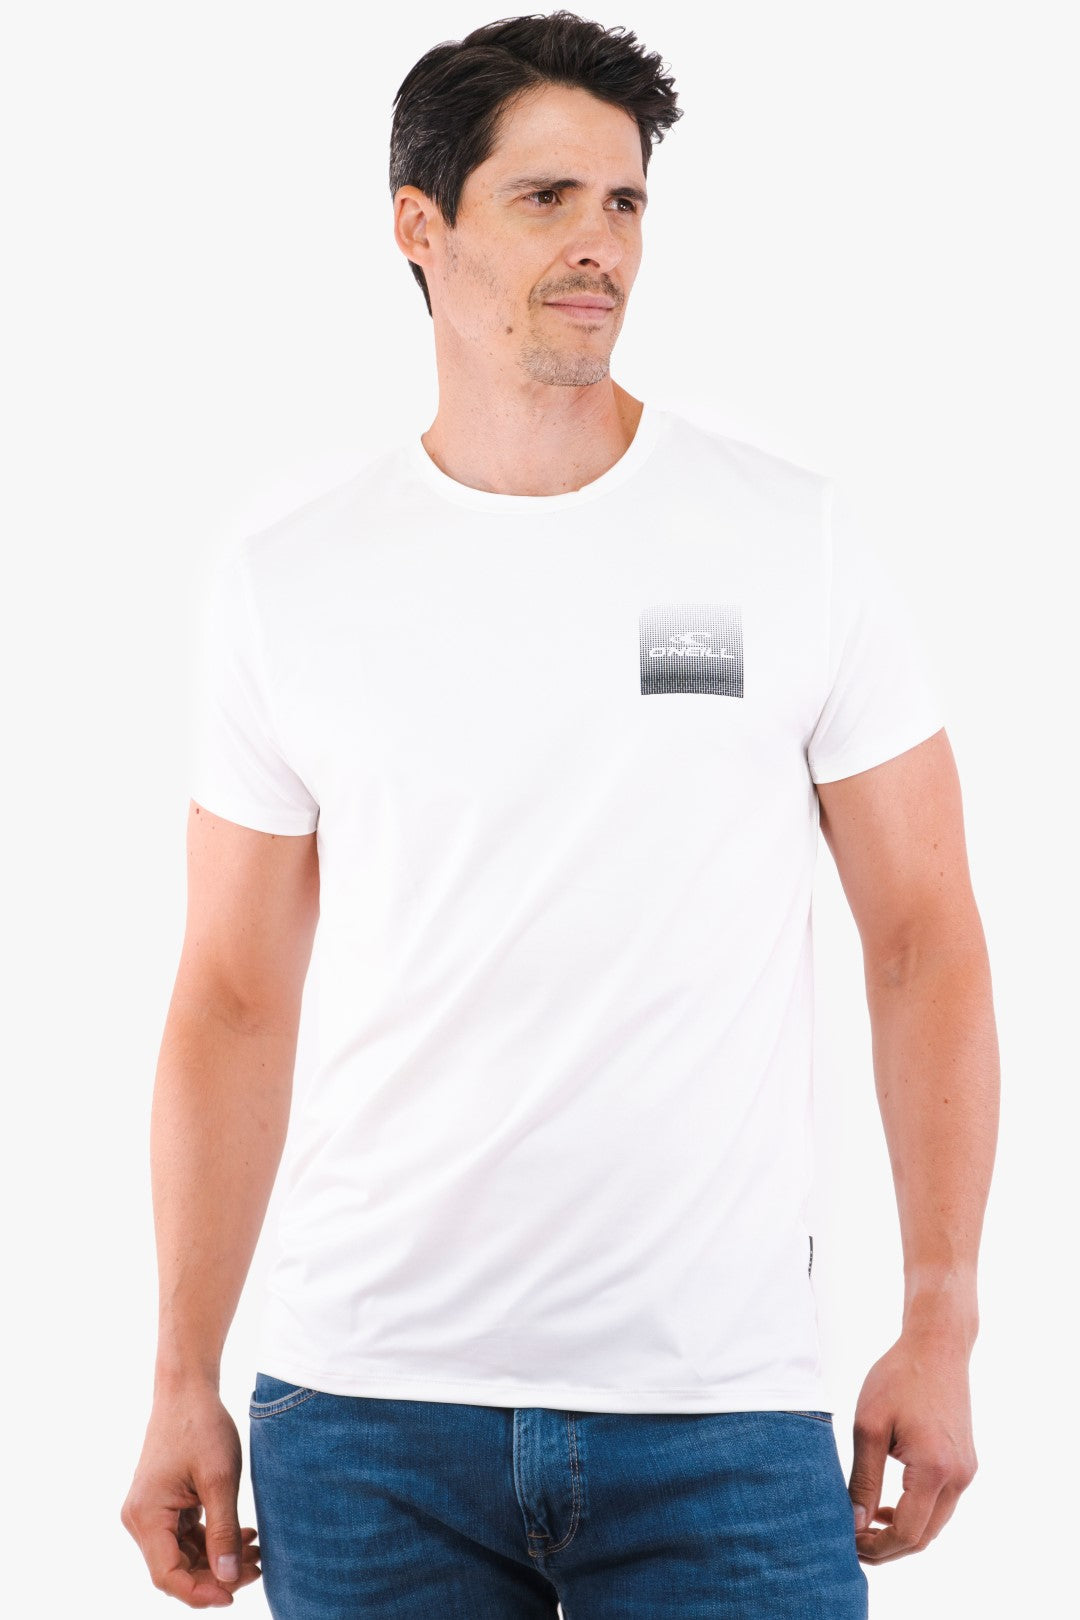 T-Shirt Protection Uv Fps Oneill De Couleur Blanc Maillot